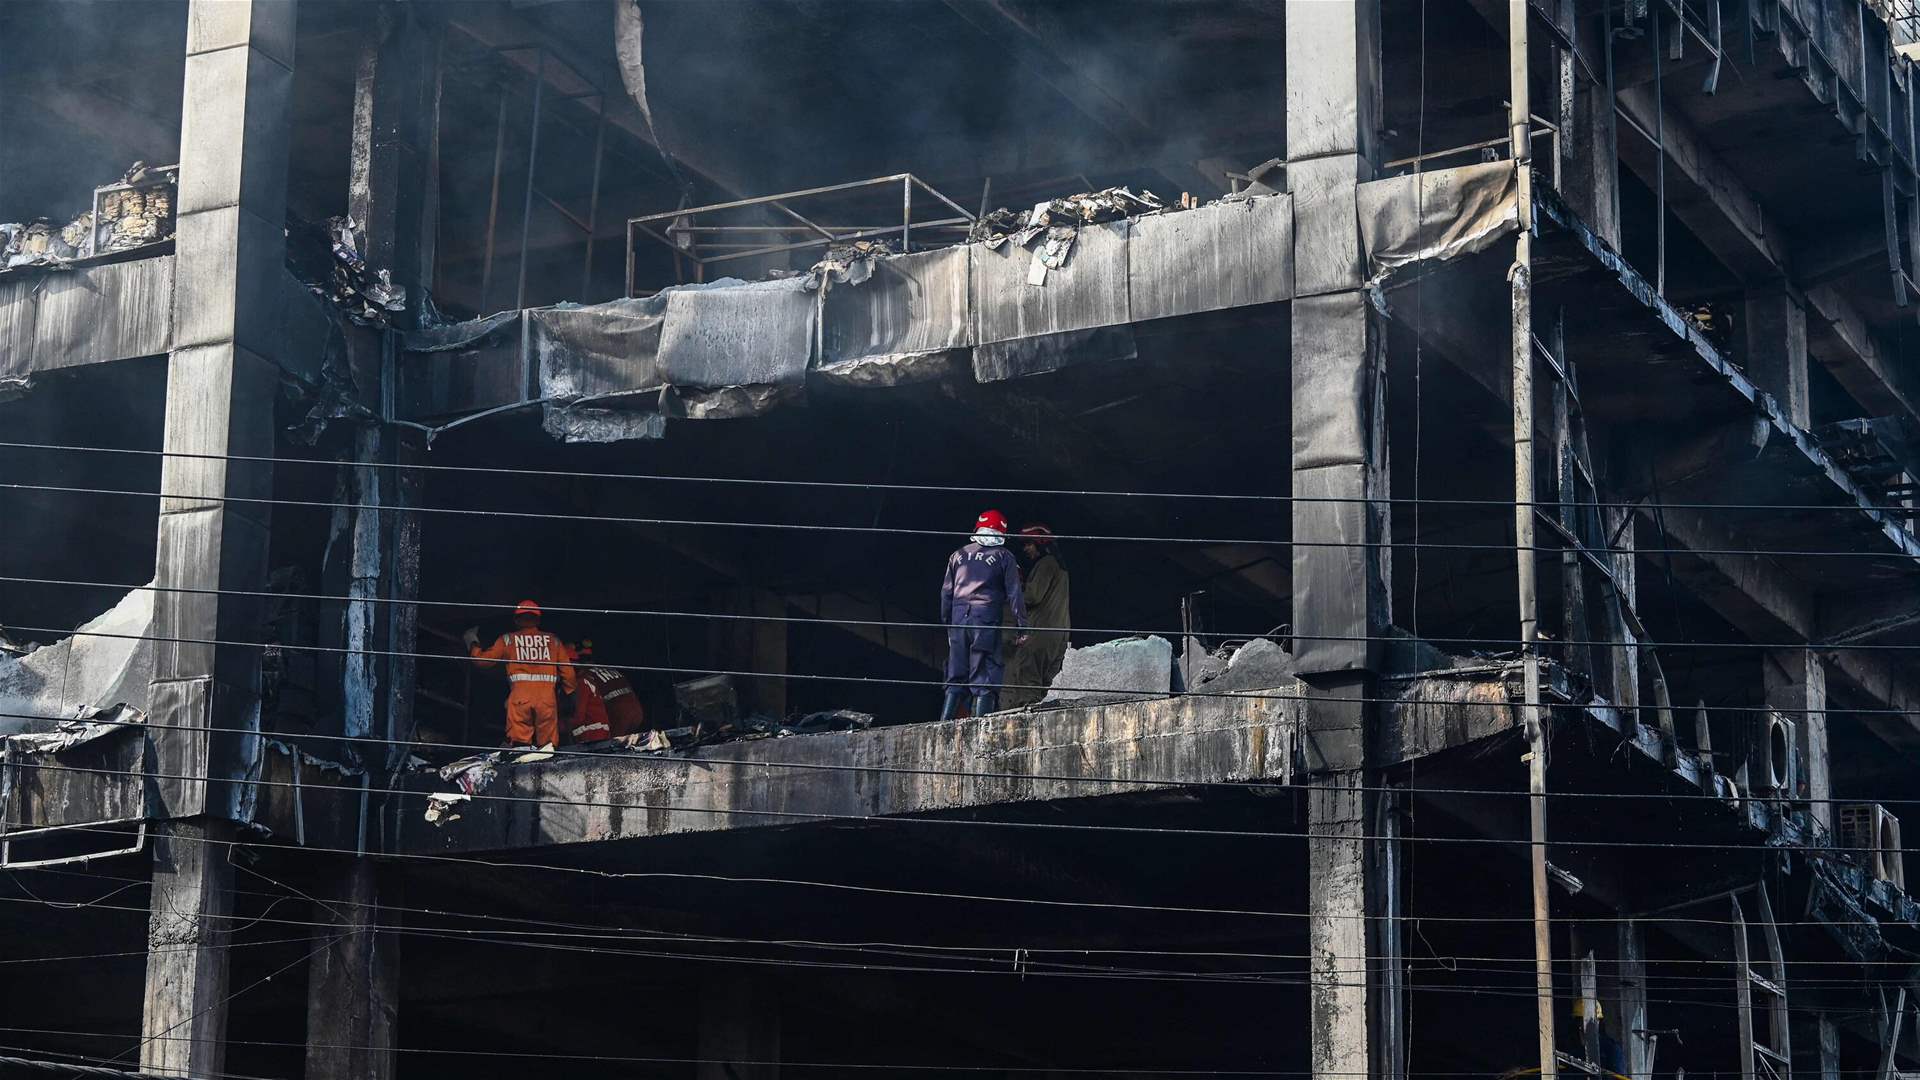 Bangladesh fire kills 45, injures dozens